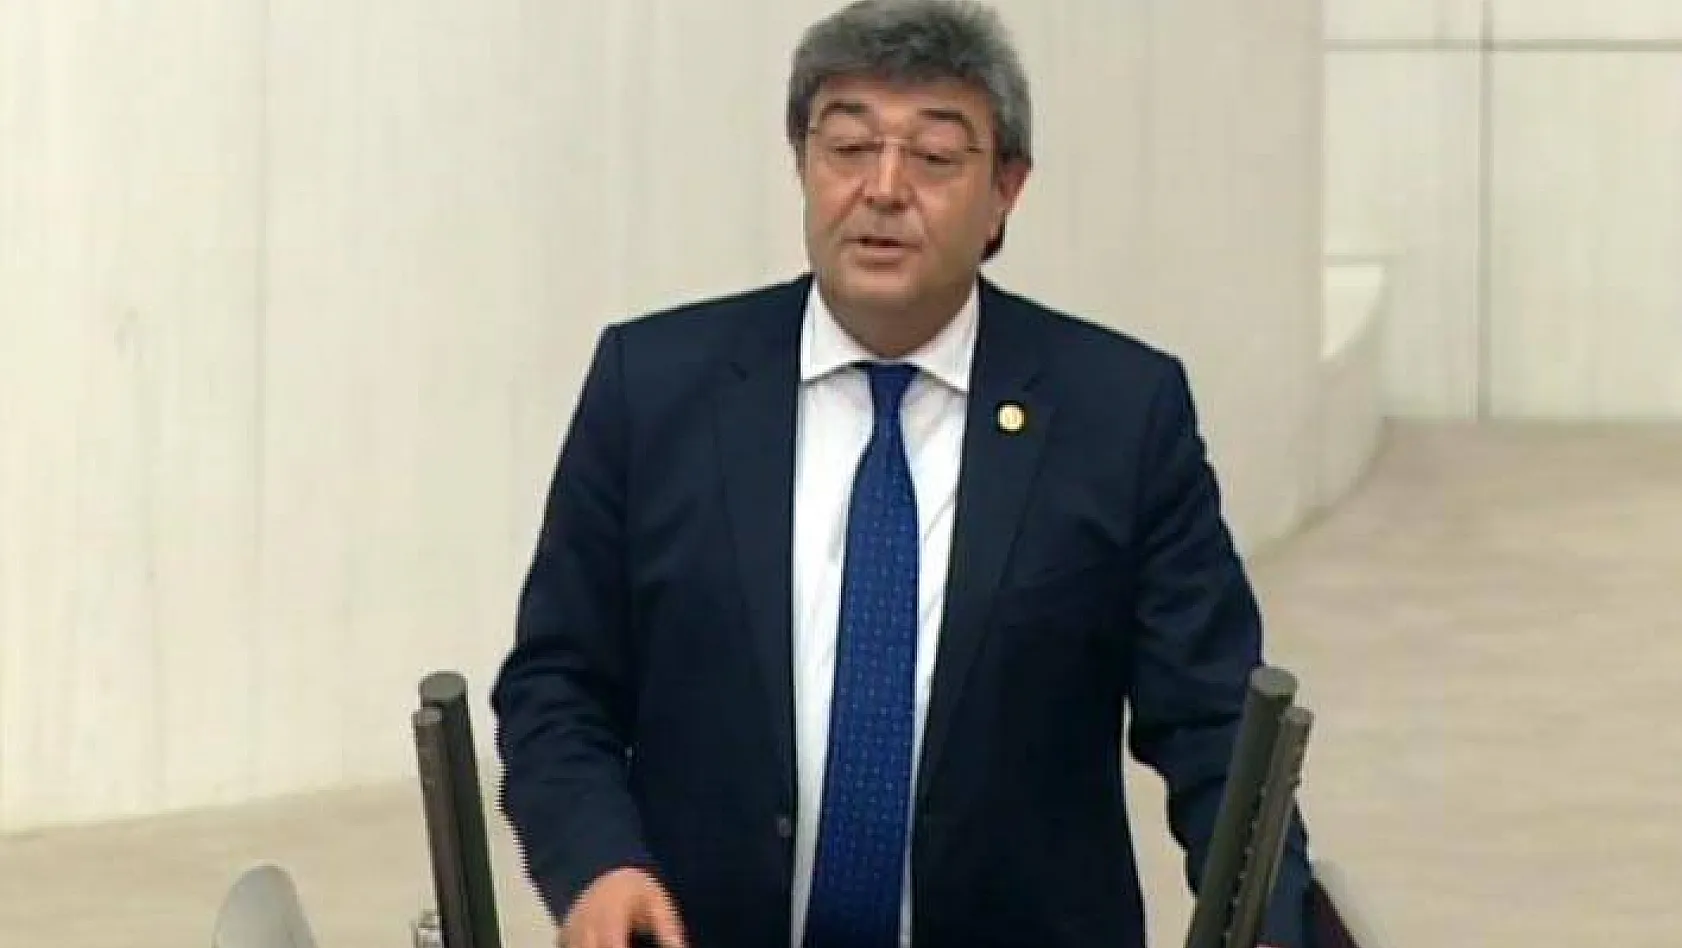  İYİ Parti Milletvekili Ataş'tan, Meclis'te çiftçiye destek çağrısı